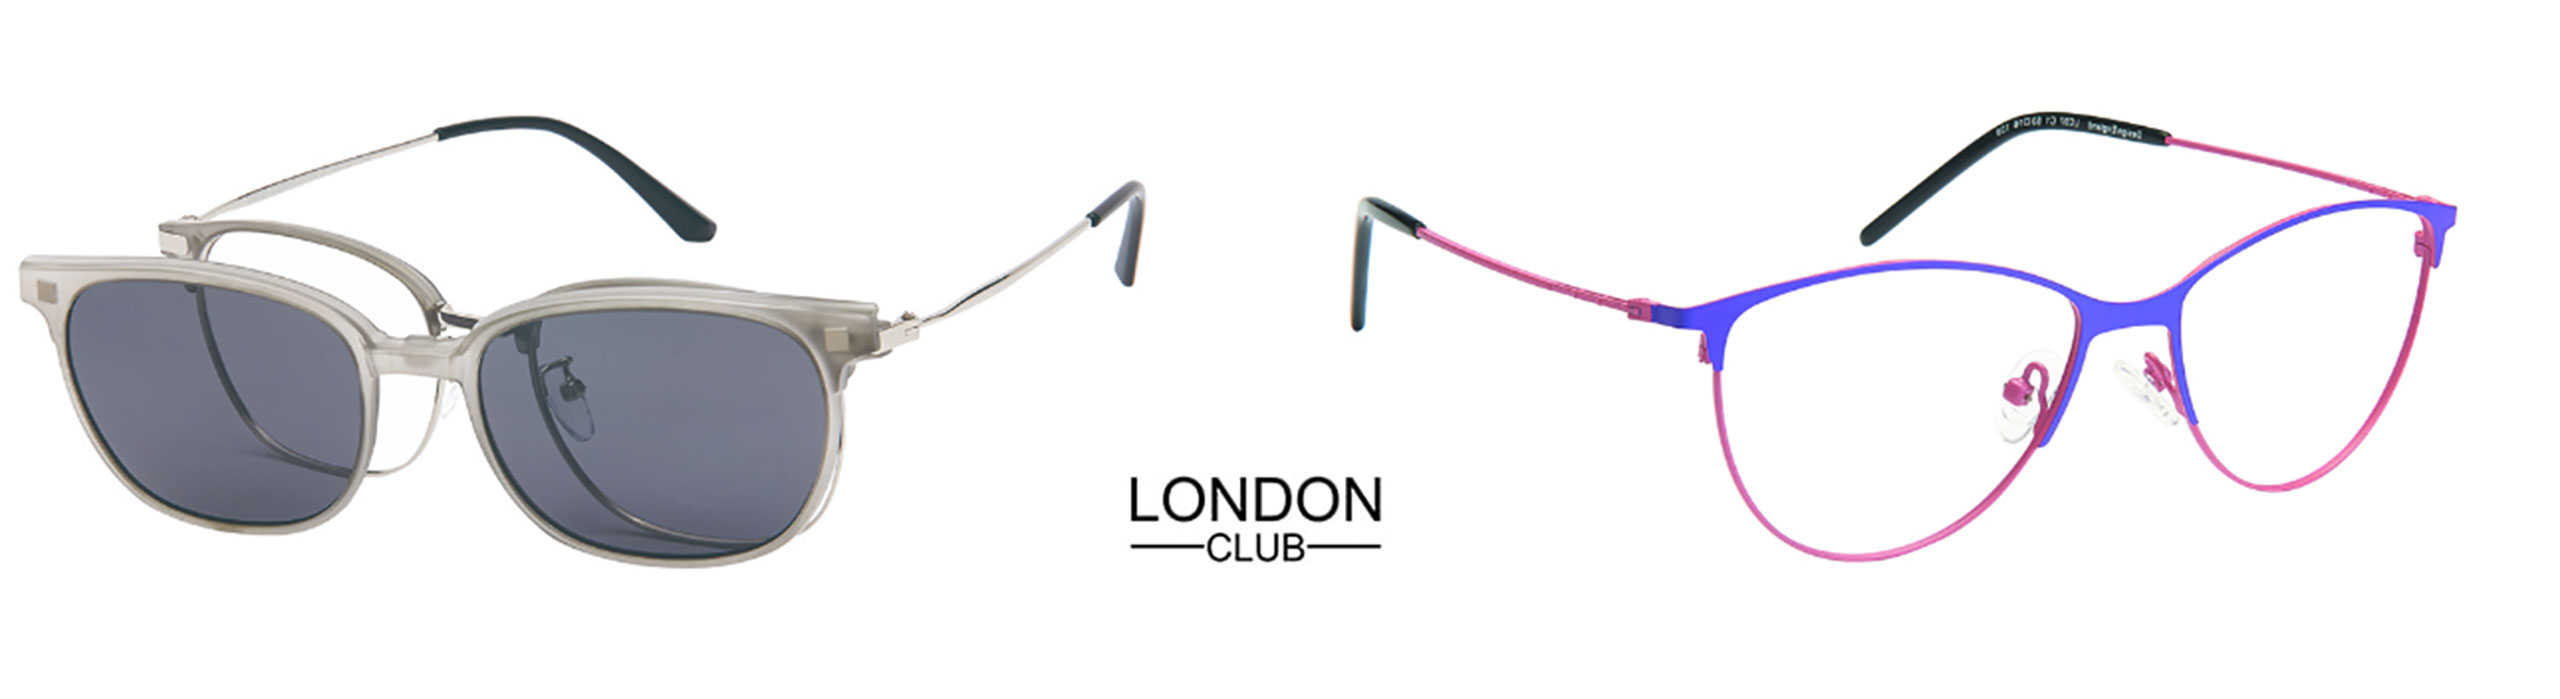 London Club eyewear